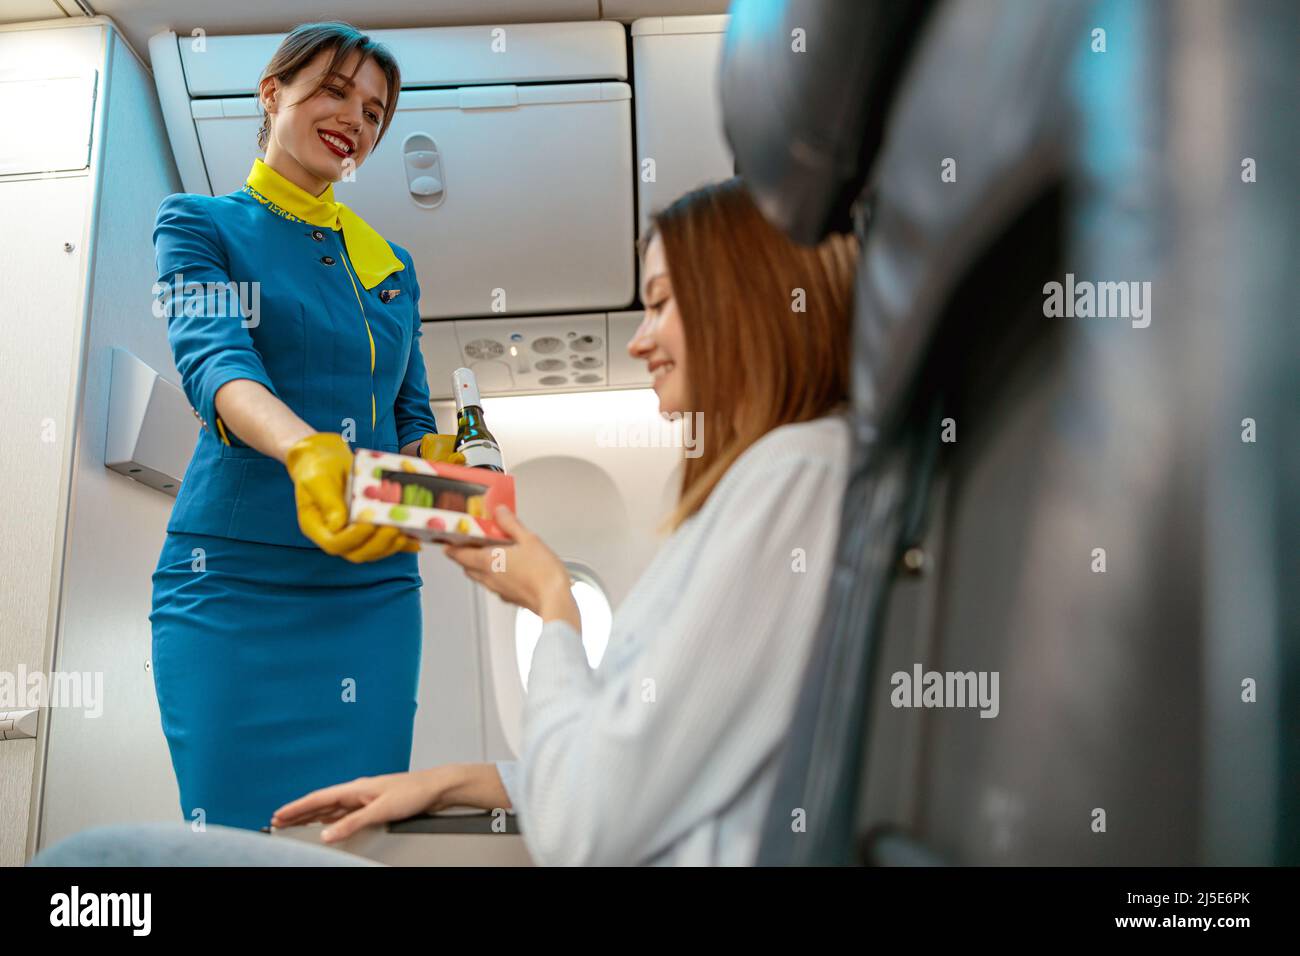 Joyful stewardess giving cookies to woman in airplane Stock Photo